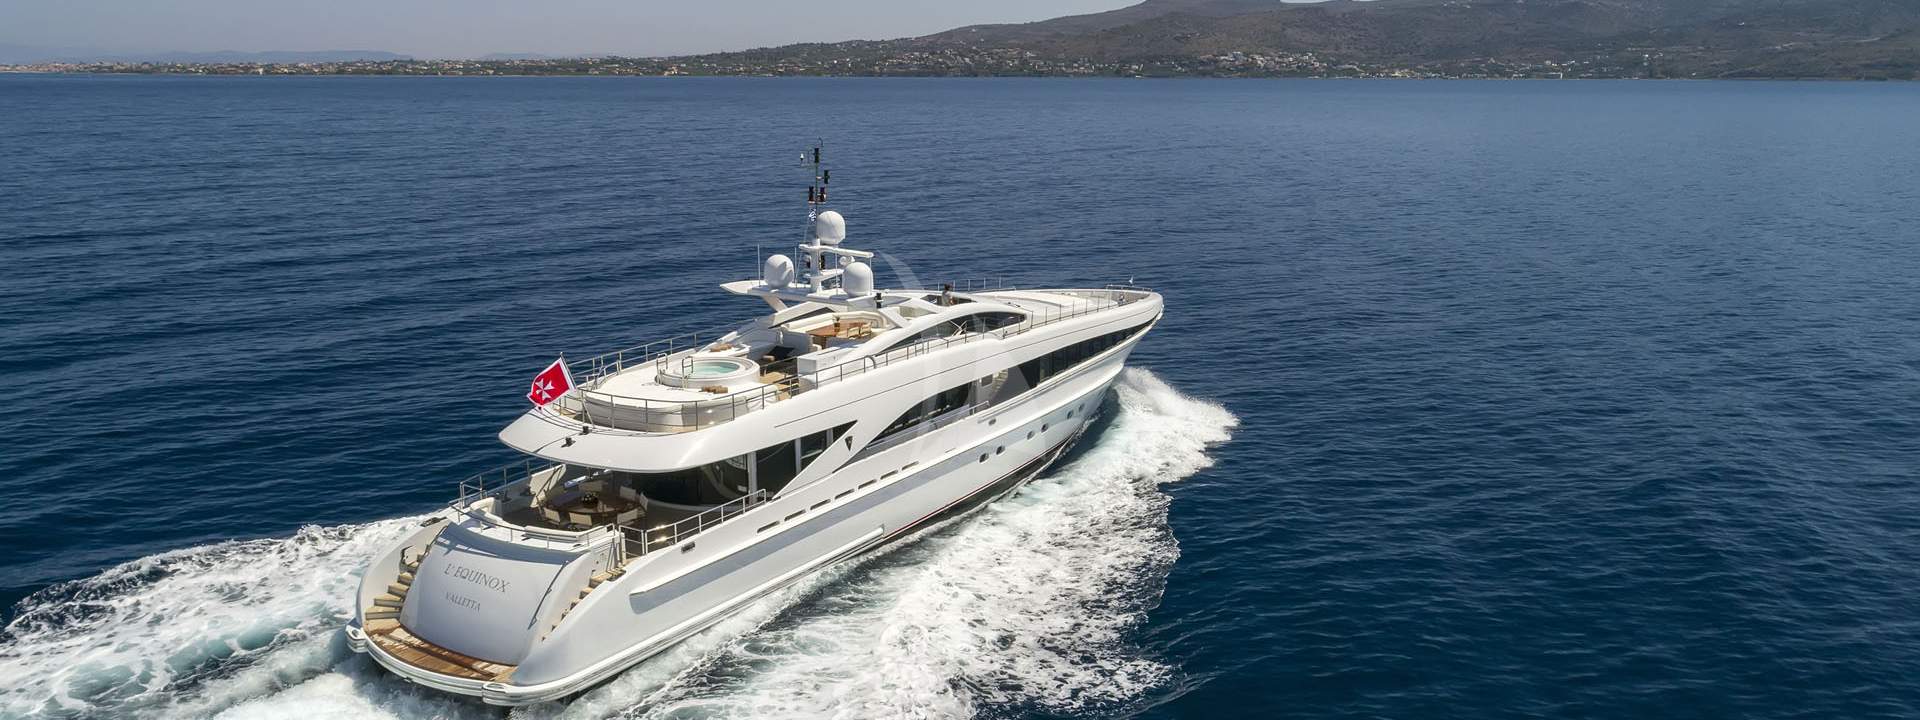 Luxury Yacht L'Equinox